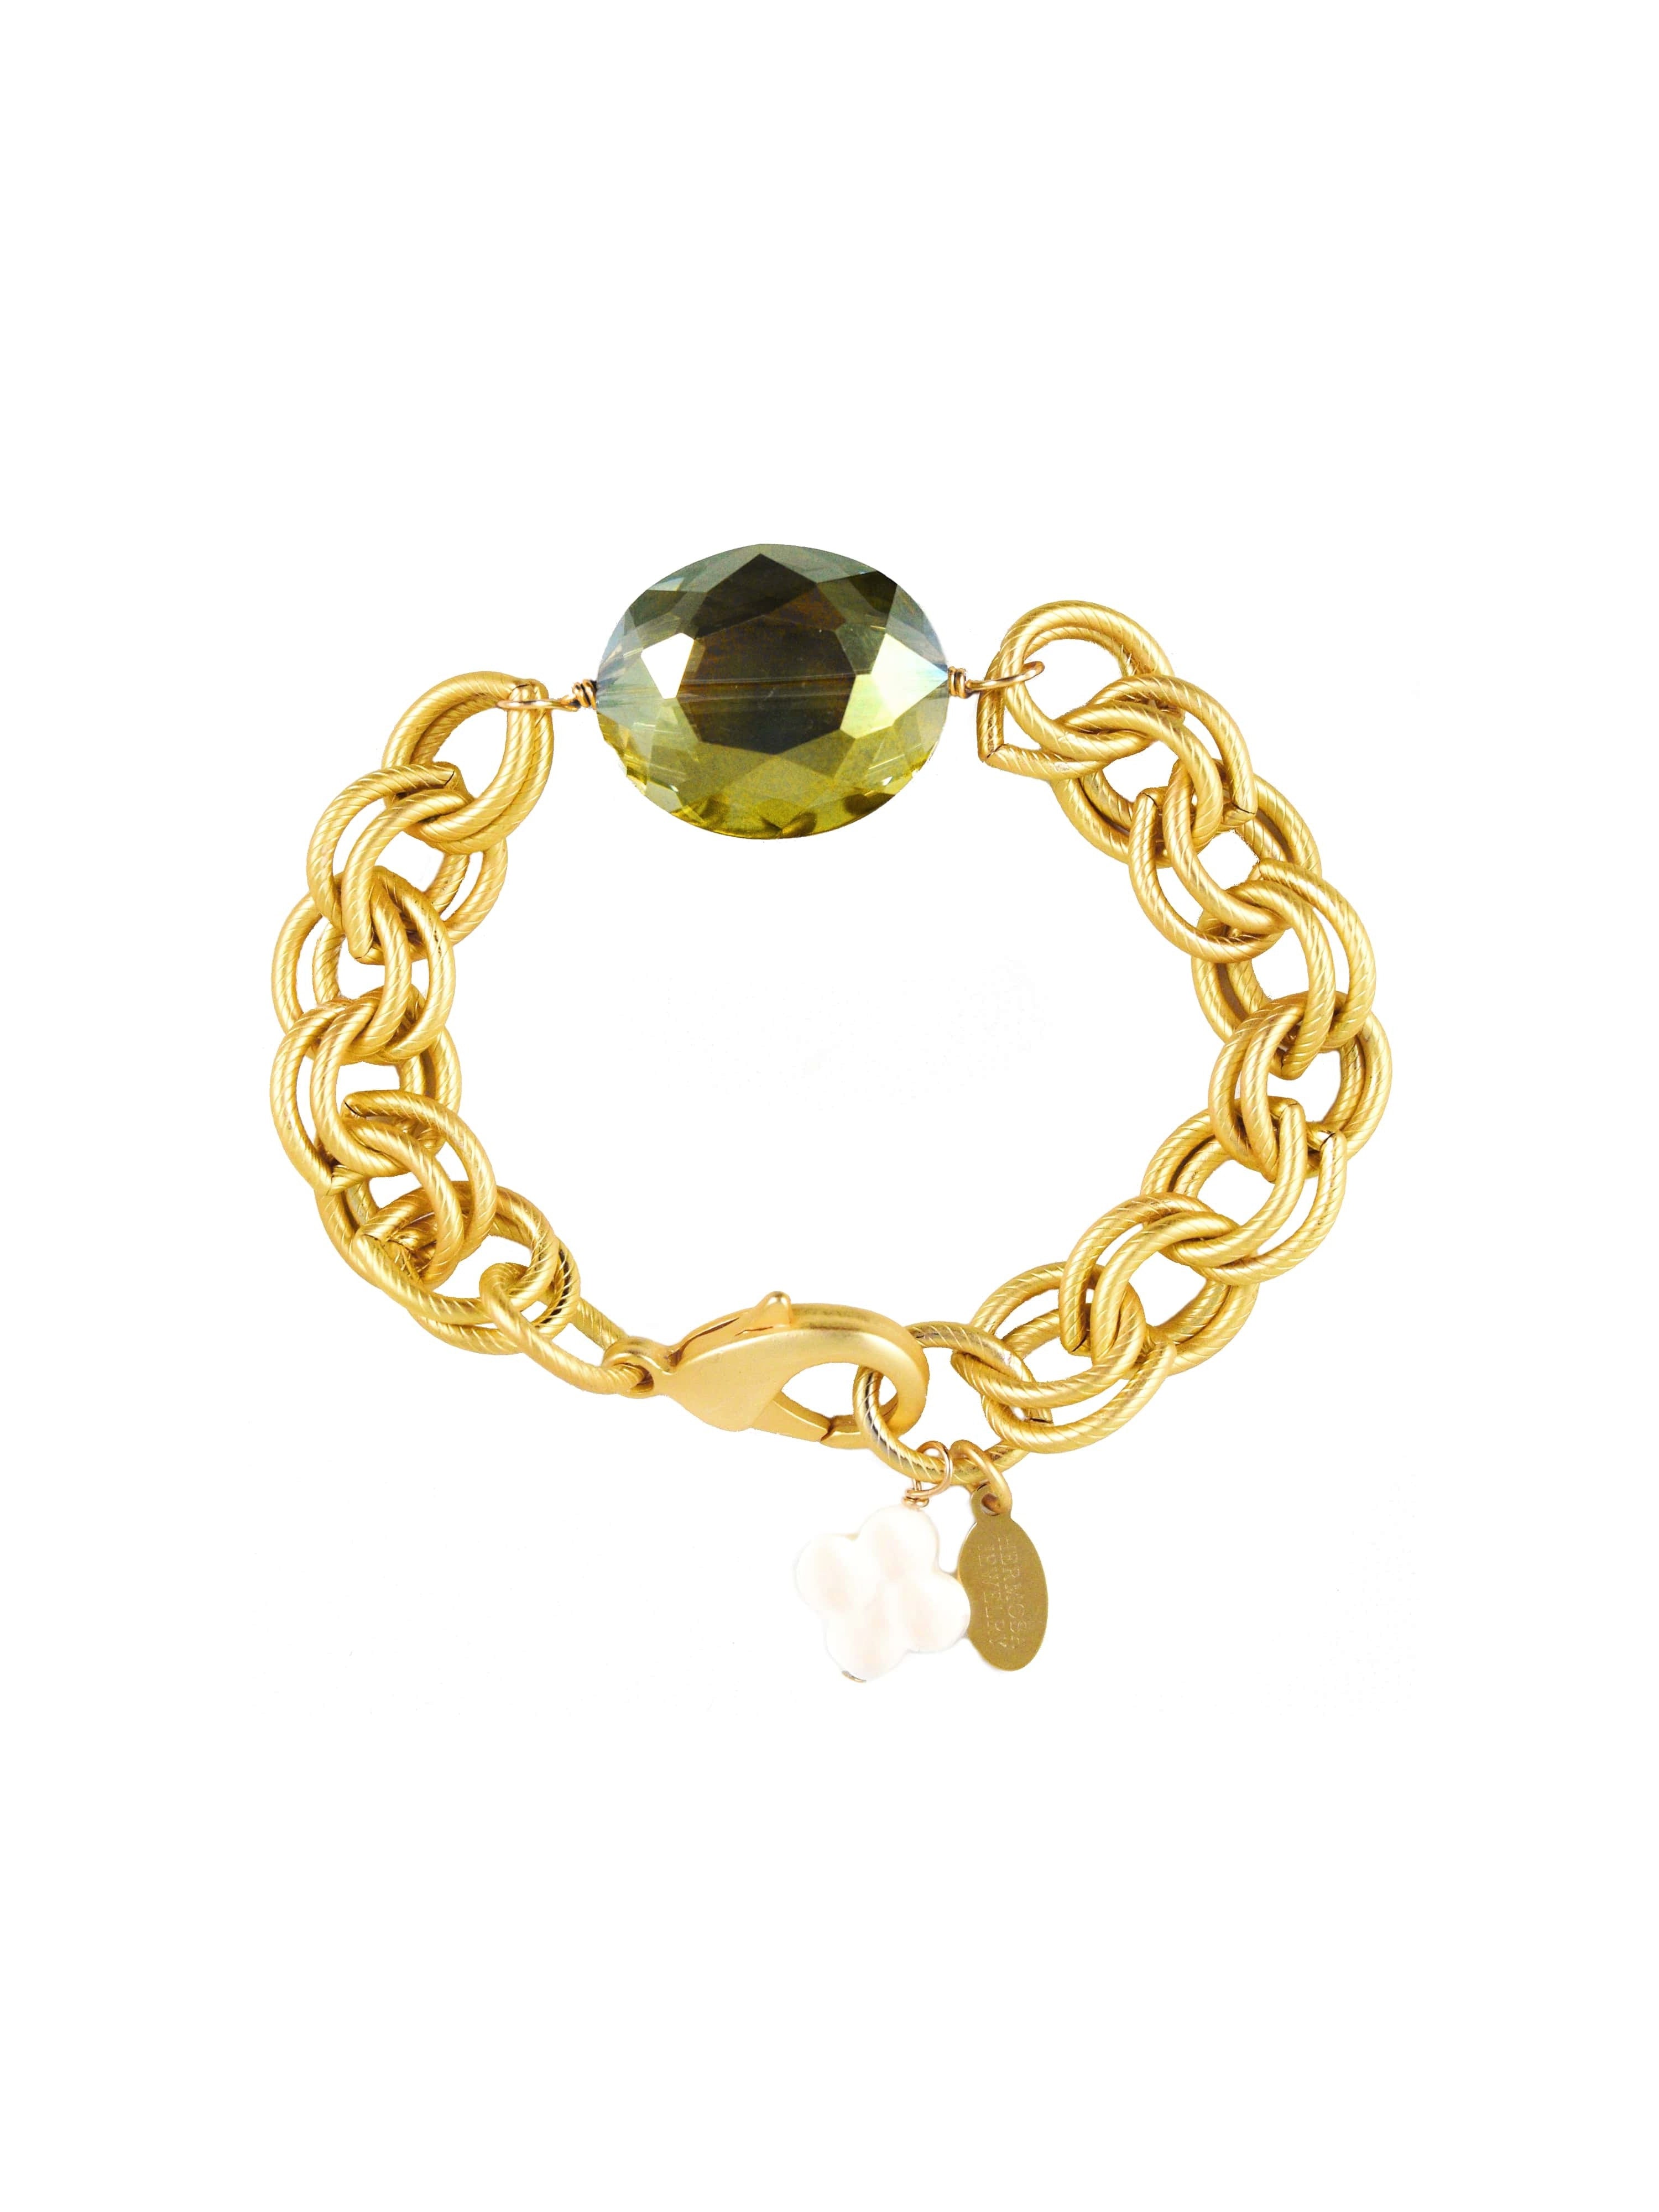 Tula Bracelet with Green Glass